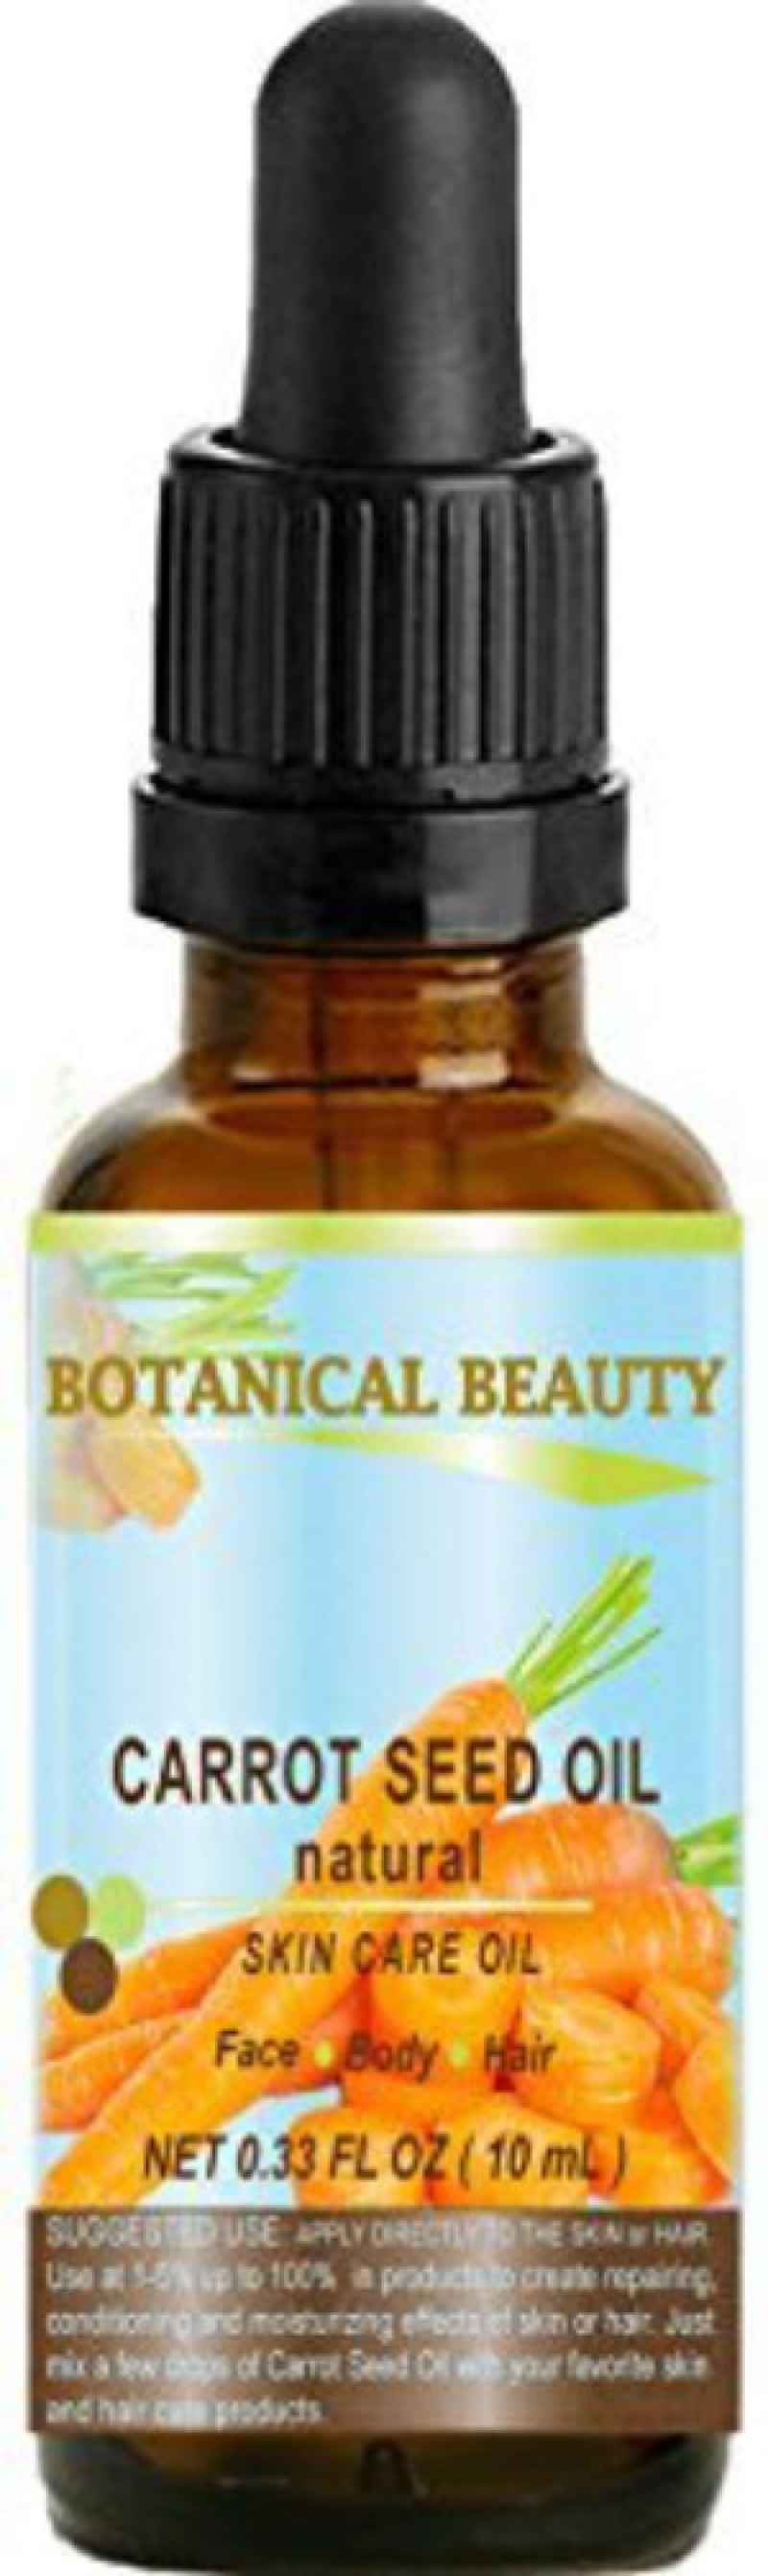 Carrot Seed Oil Botanical Beauty 0.33 Fl oz - 10 ml.